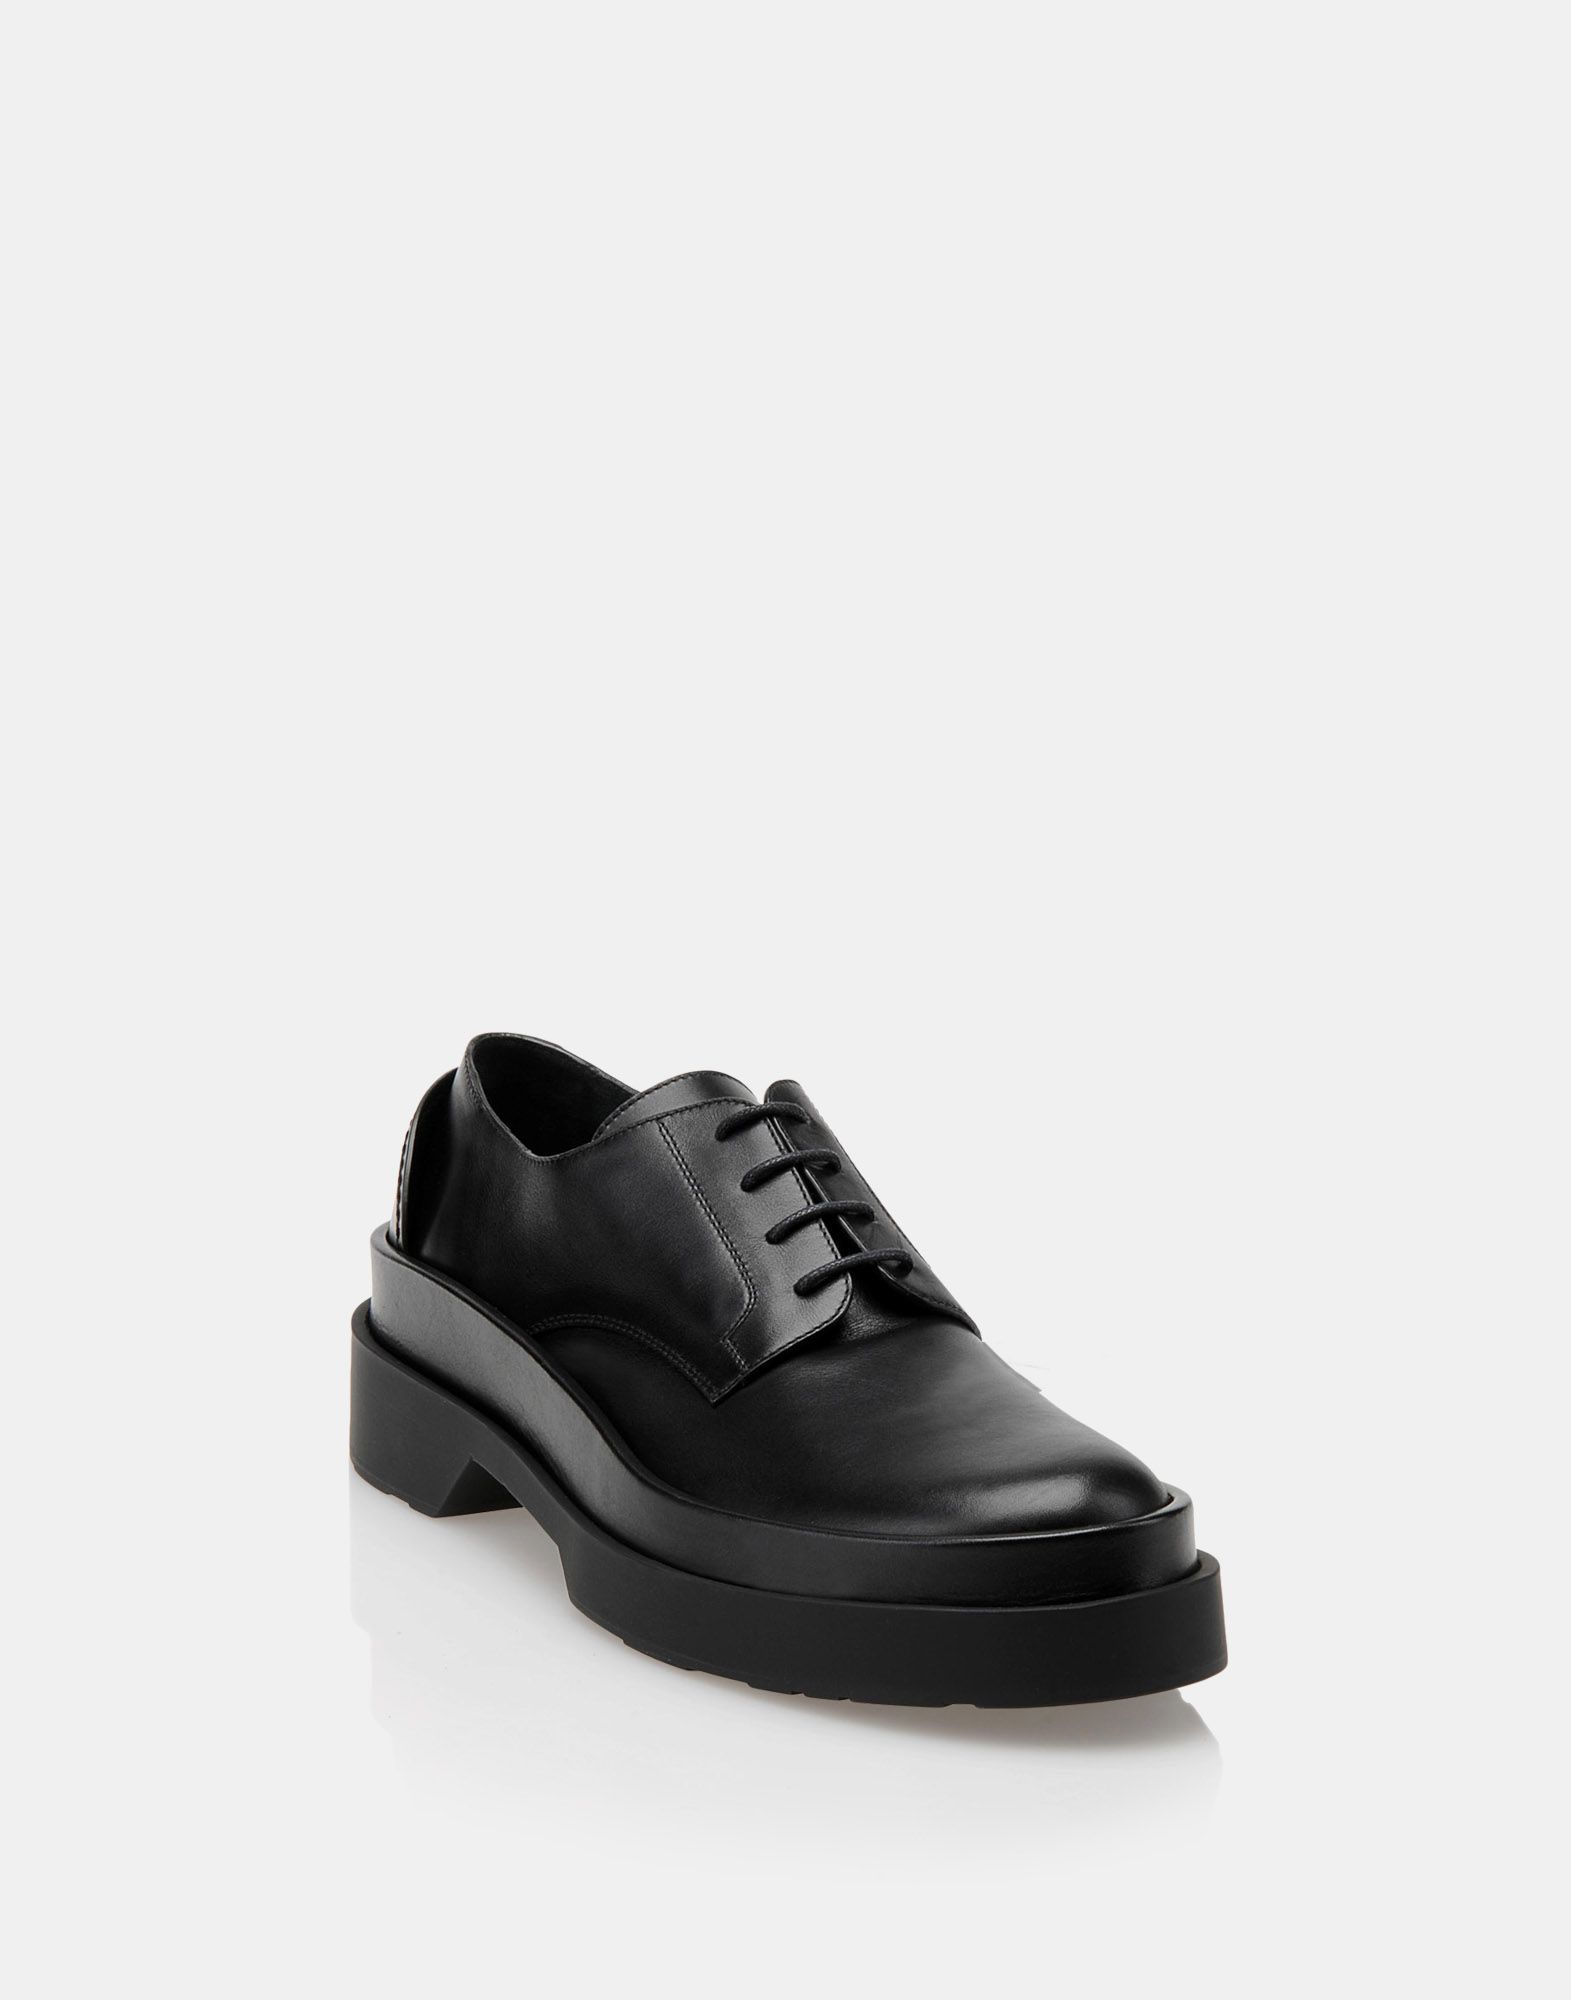 Lace up Men - Shoes Men on Jil Sander Online Store